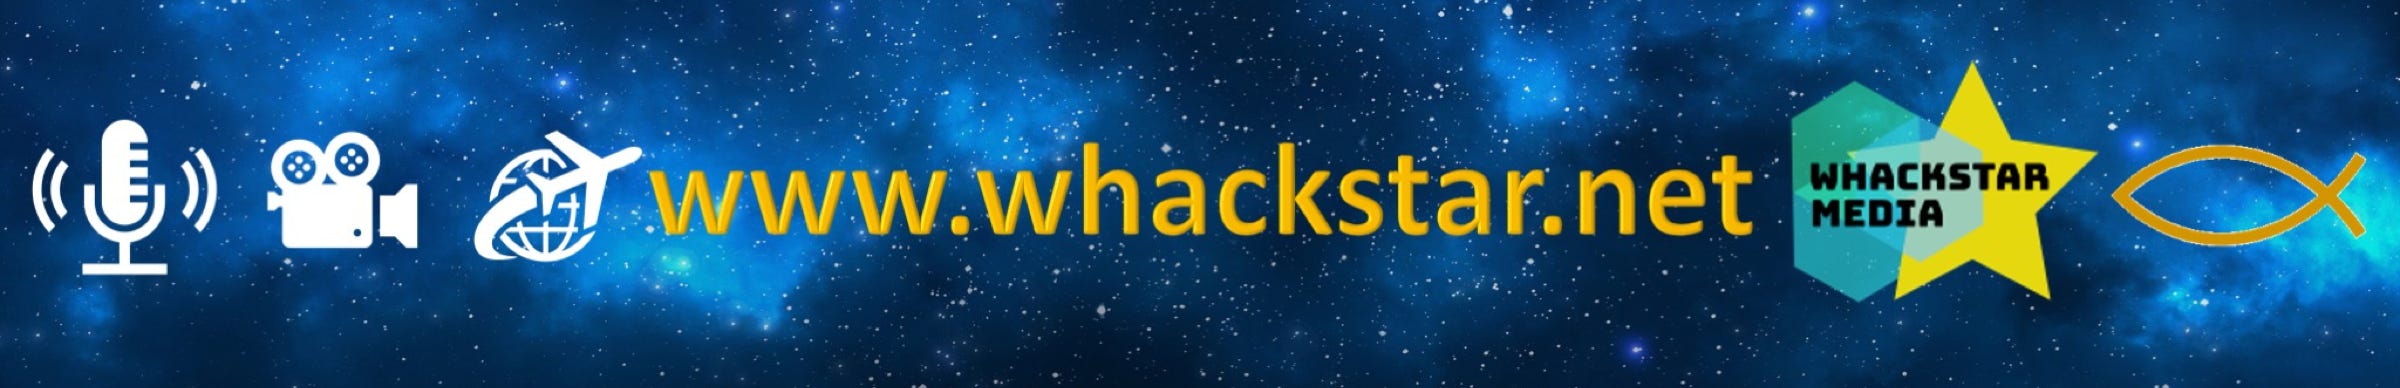 Whackstar header 